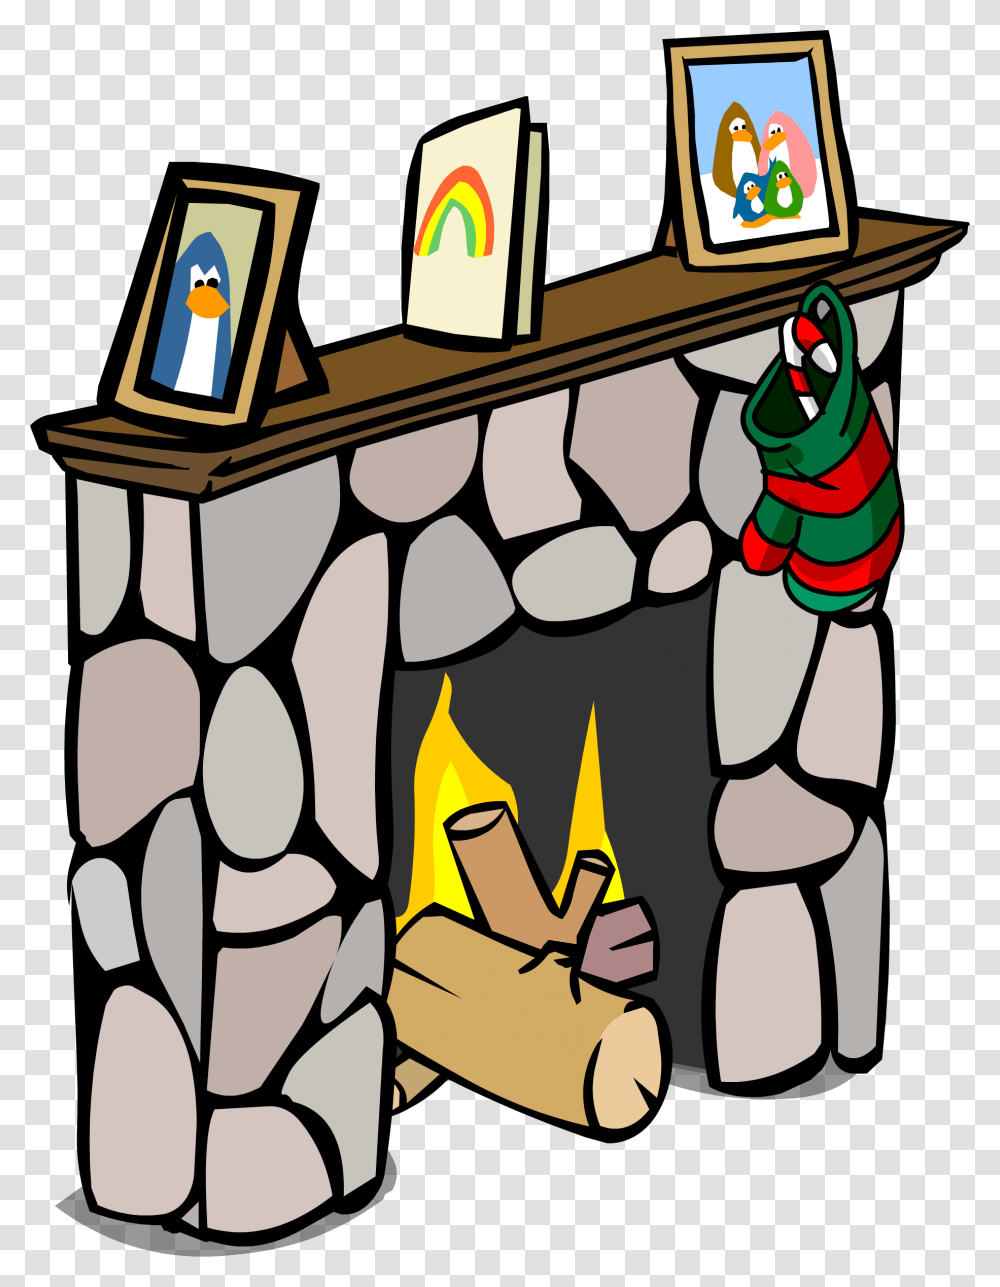 Fireplace Sprite Fireplace Club Penguin Tv, Shelf, Shop, Interior Design, Beverage Transparent Png